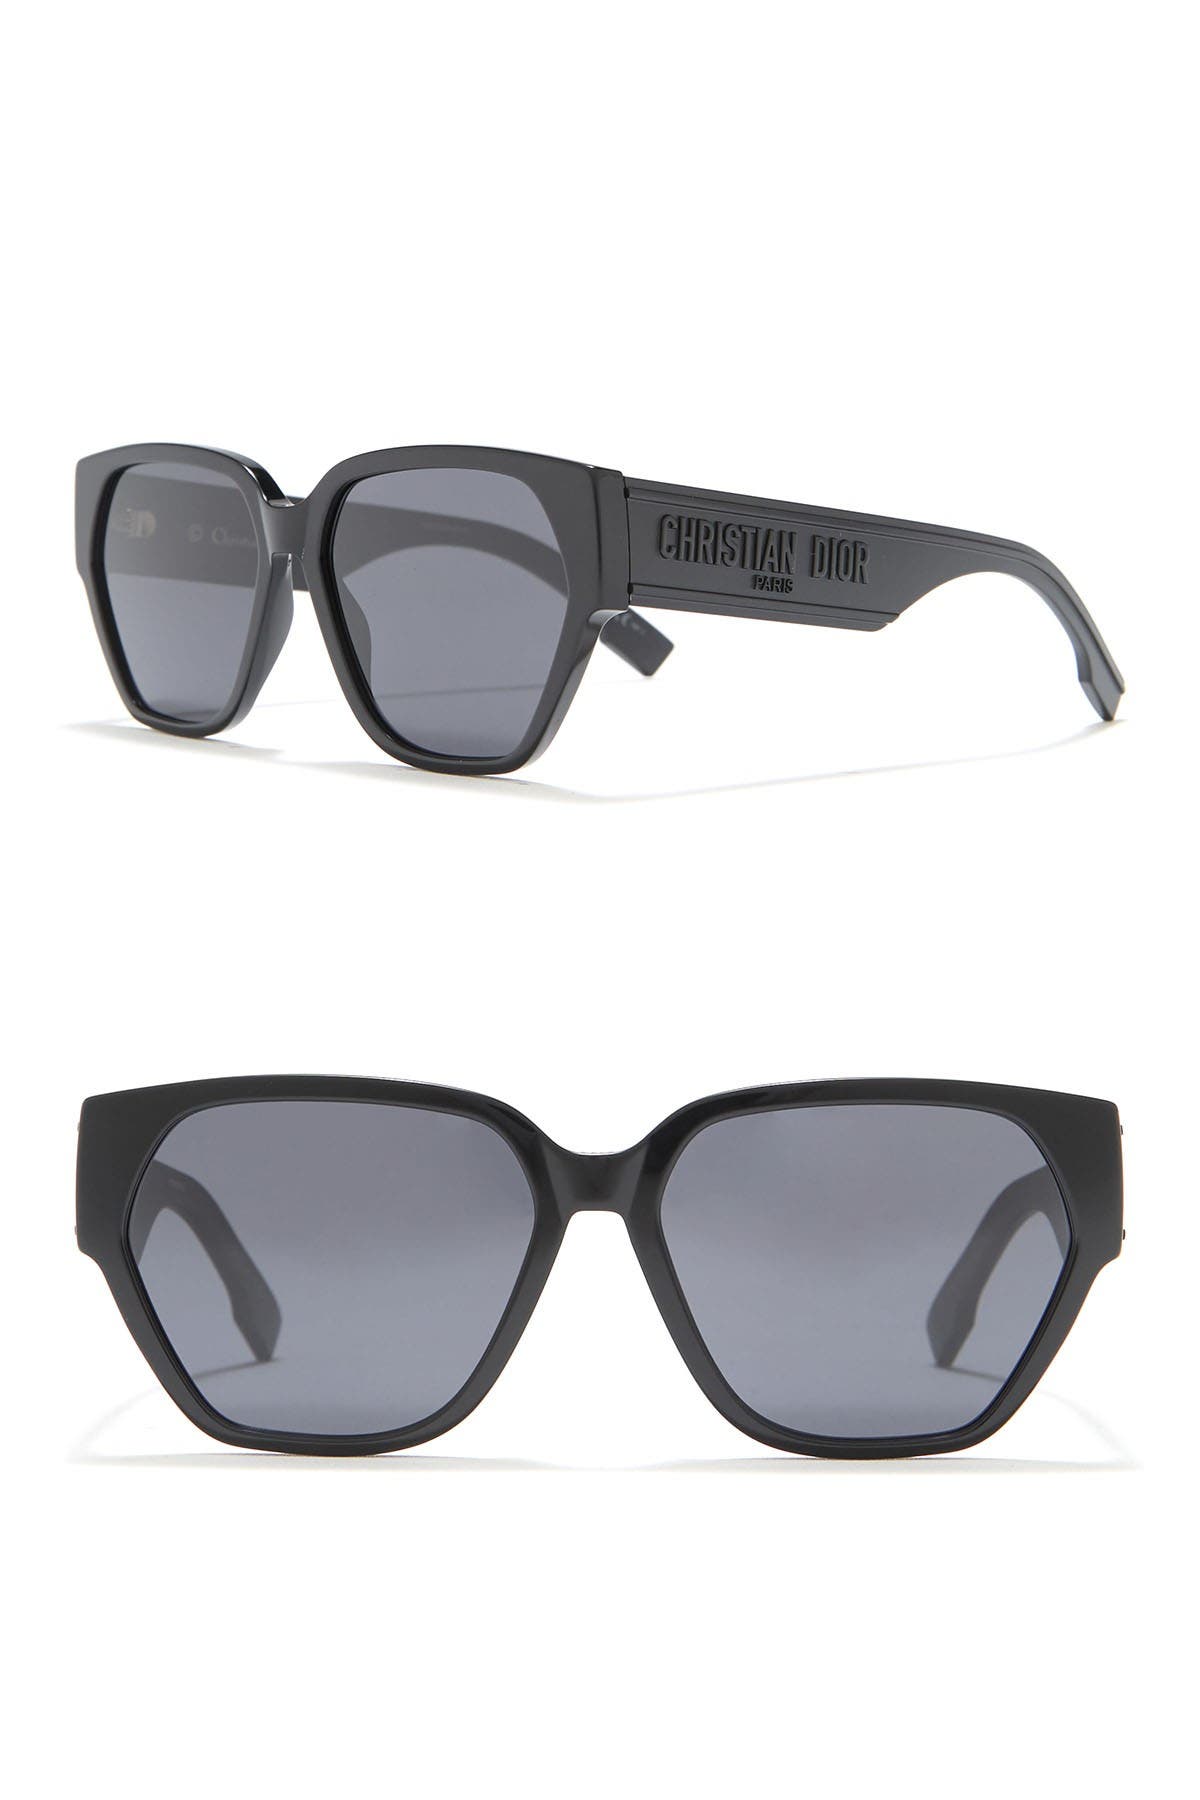 dior rectangle sunglasses